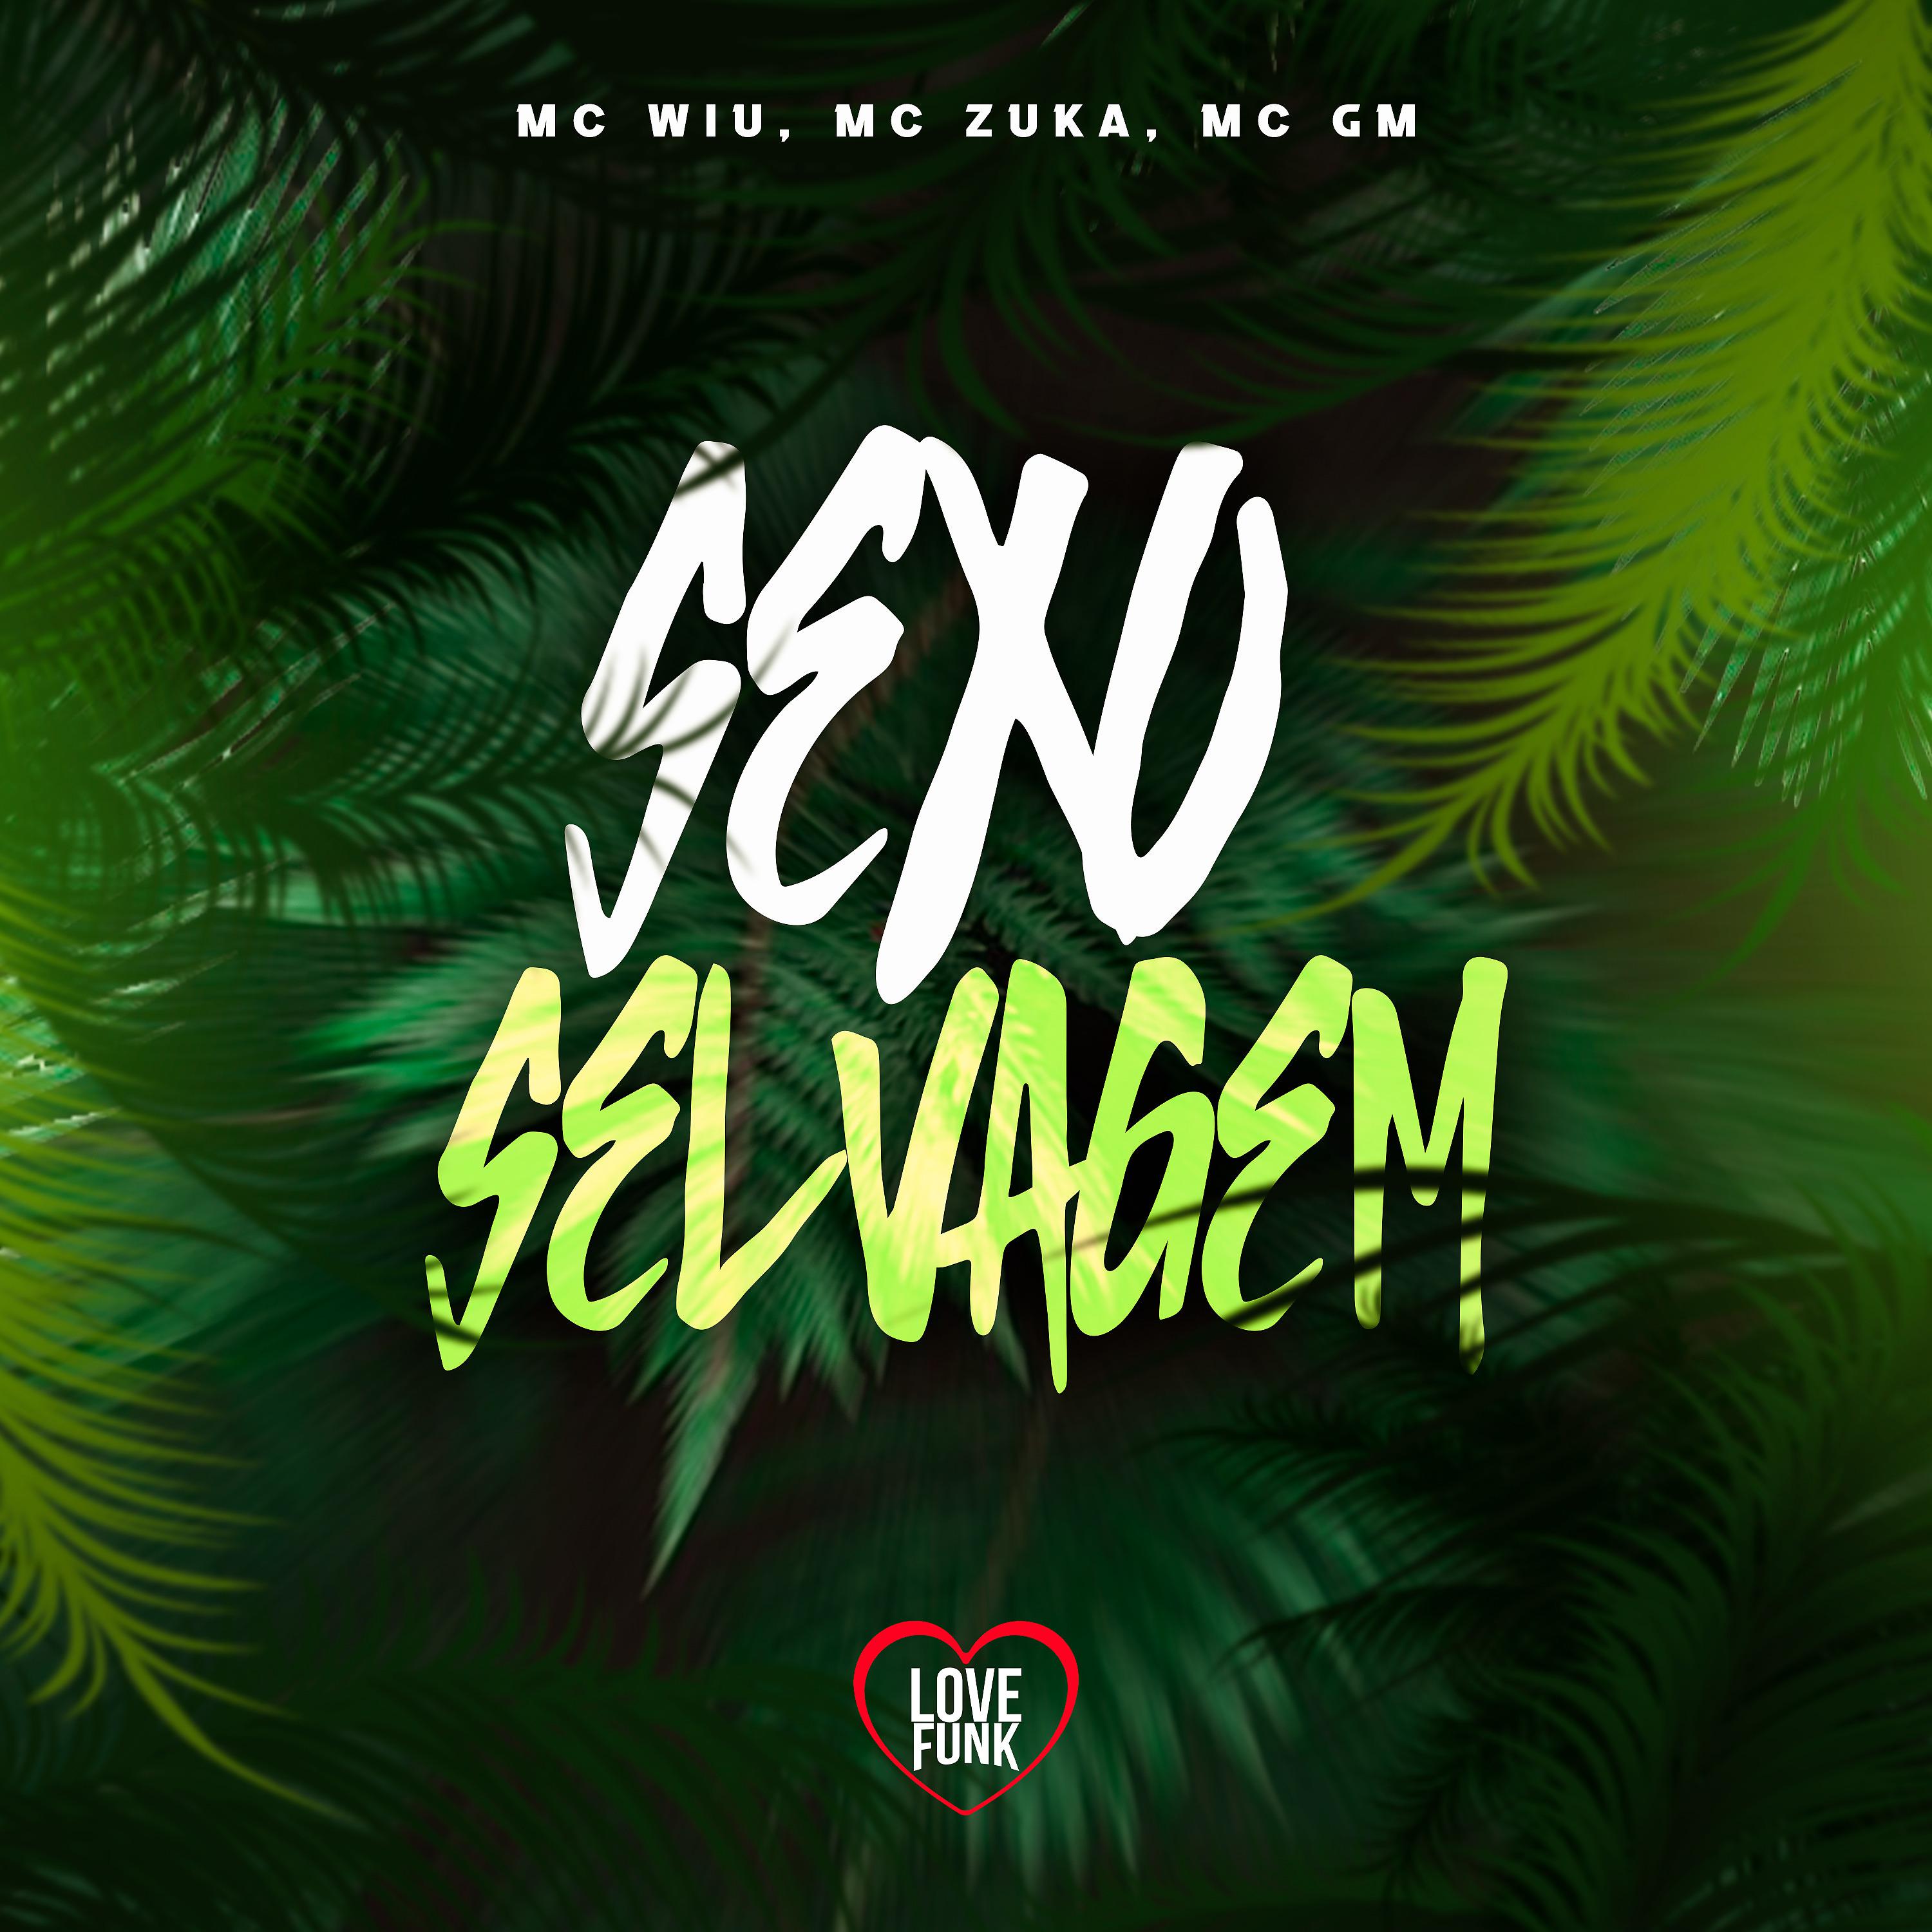 Постер альбома Sexo Selvagem